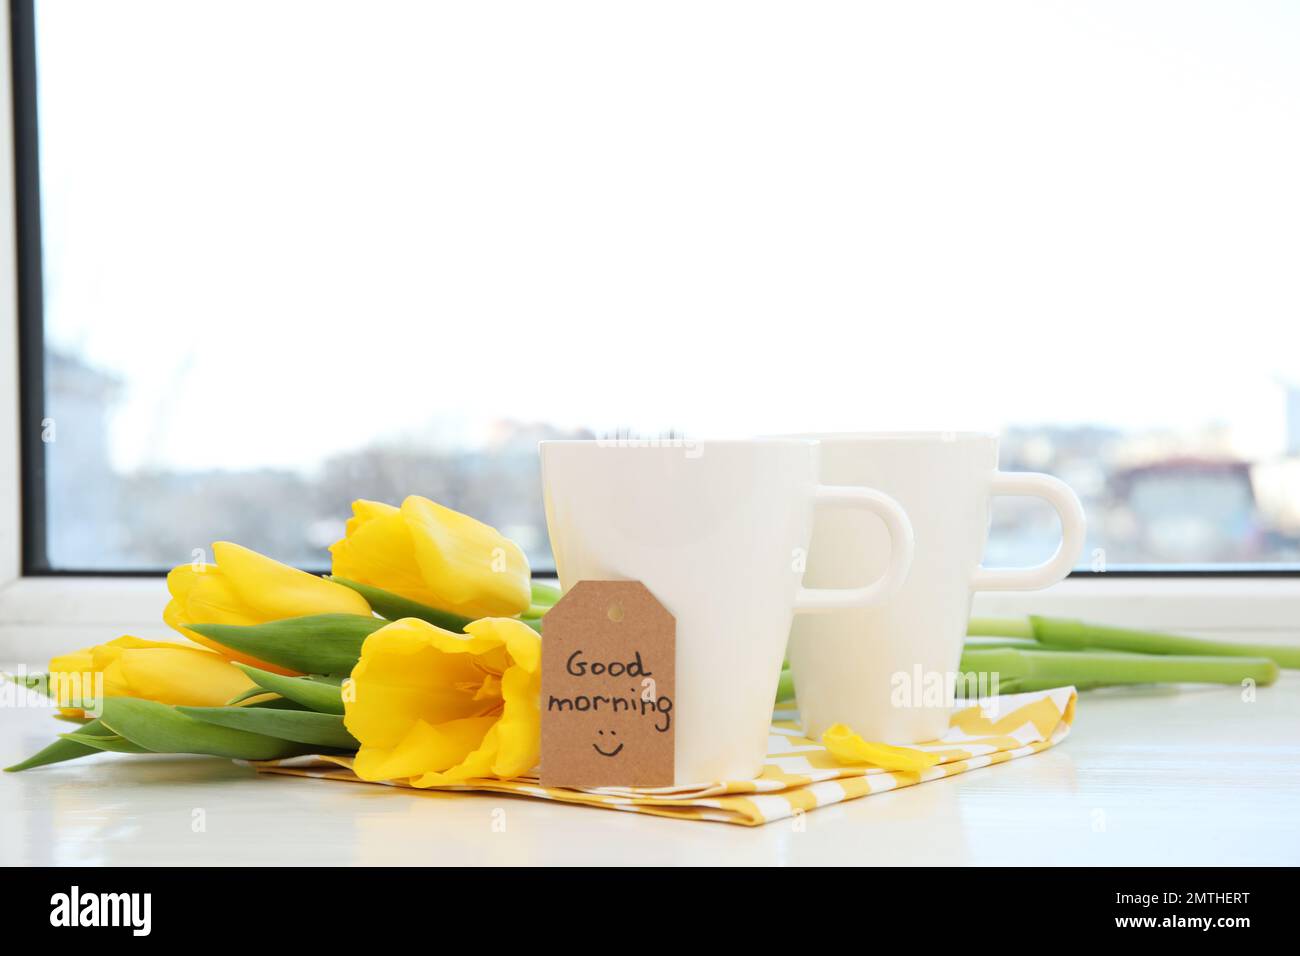 https://c8.alamy.com/comp/2MTHERT/aromatic-coffee-beautiful-flowers-and-good-morning-wish-on-light-windowsill-2MTHERT.jpg